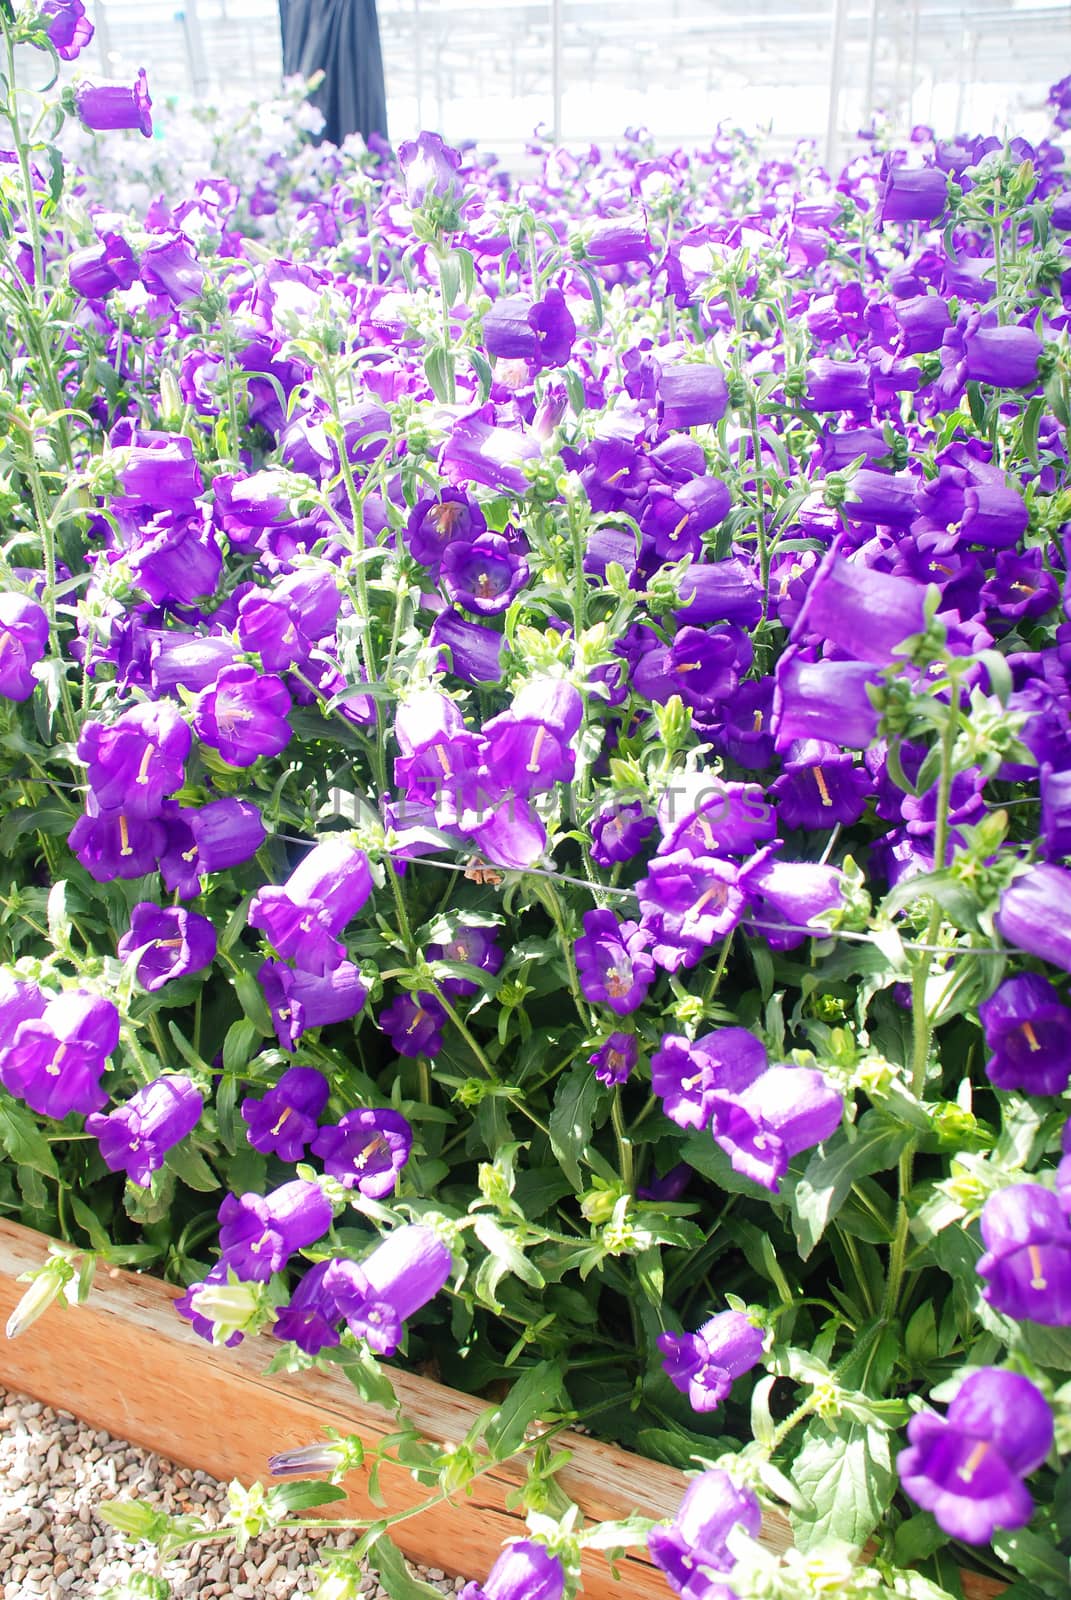 Purple Campanula flowers. Campanula Portenschlagiana by yuiyuize